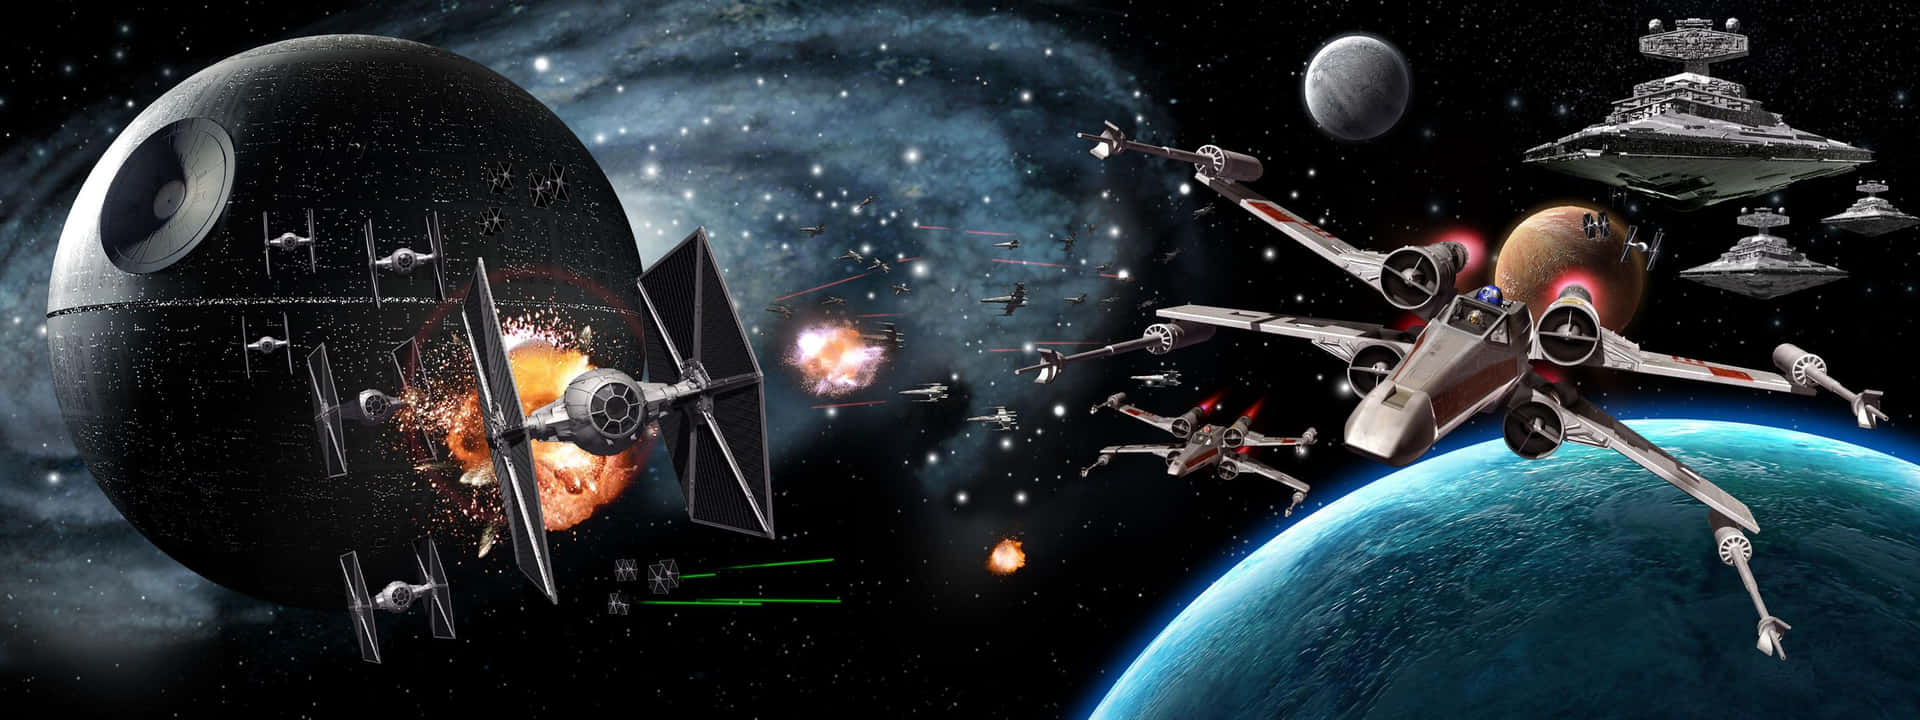 Star Wars Battlefront 2 - Bildschirmfotos. Wallpaper